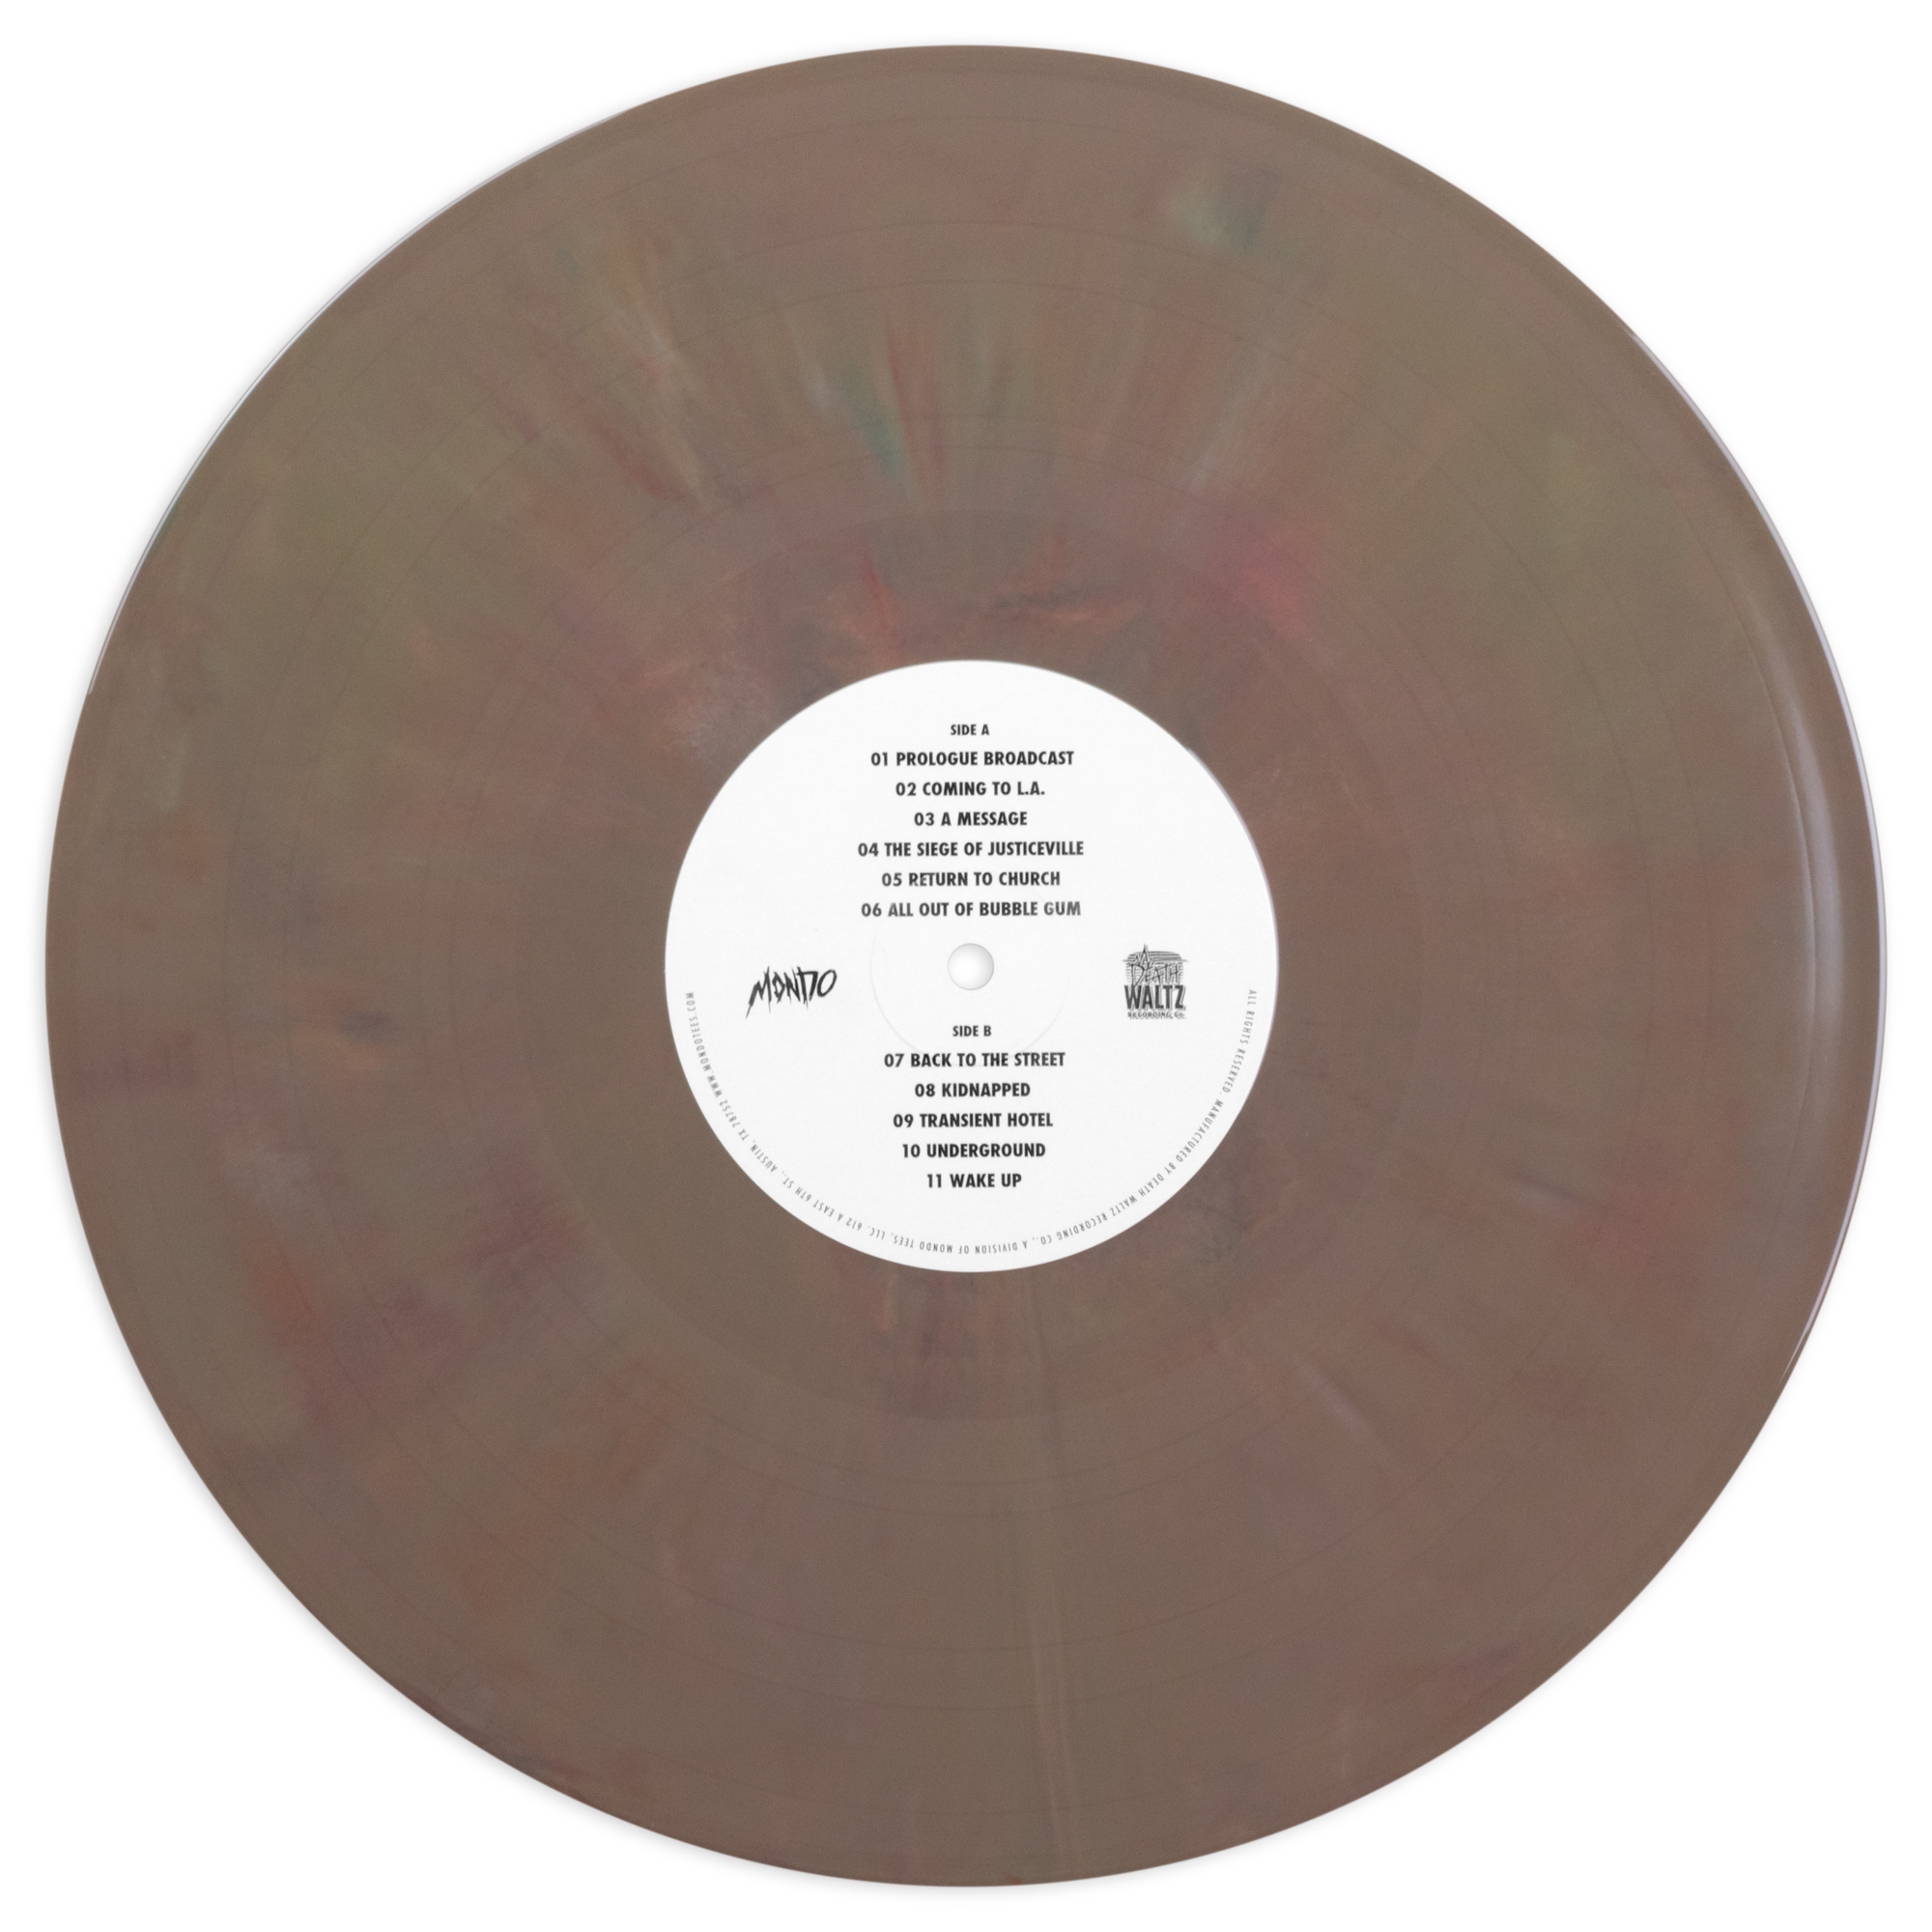 John Carpenter & Alan Howarth - They Live OST [RSD Essential Black & White  Galaxy LP]